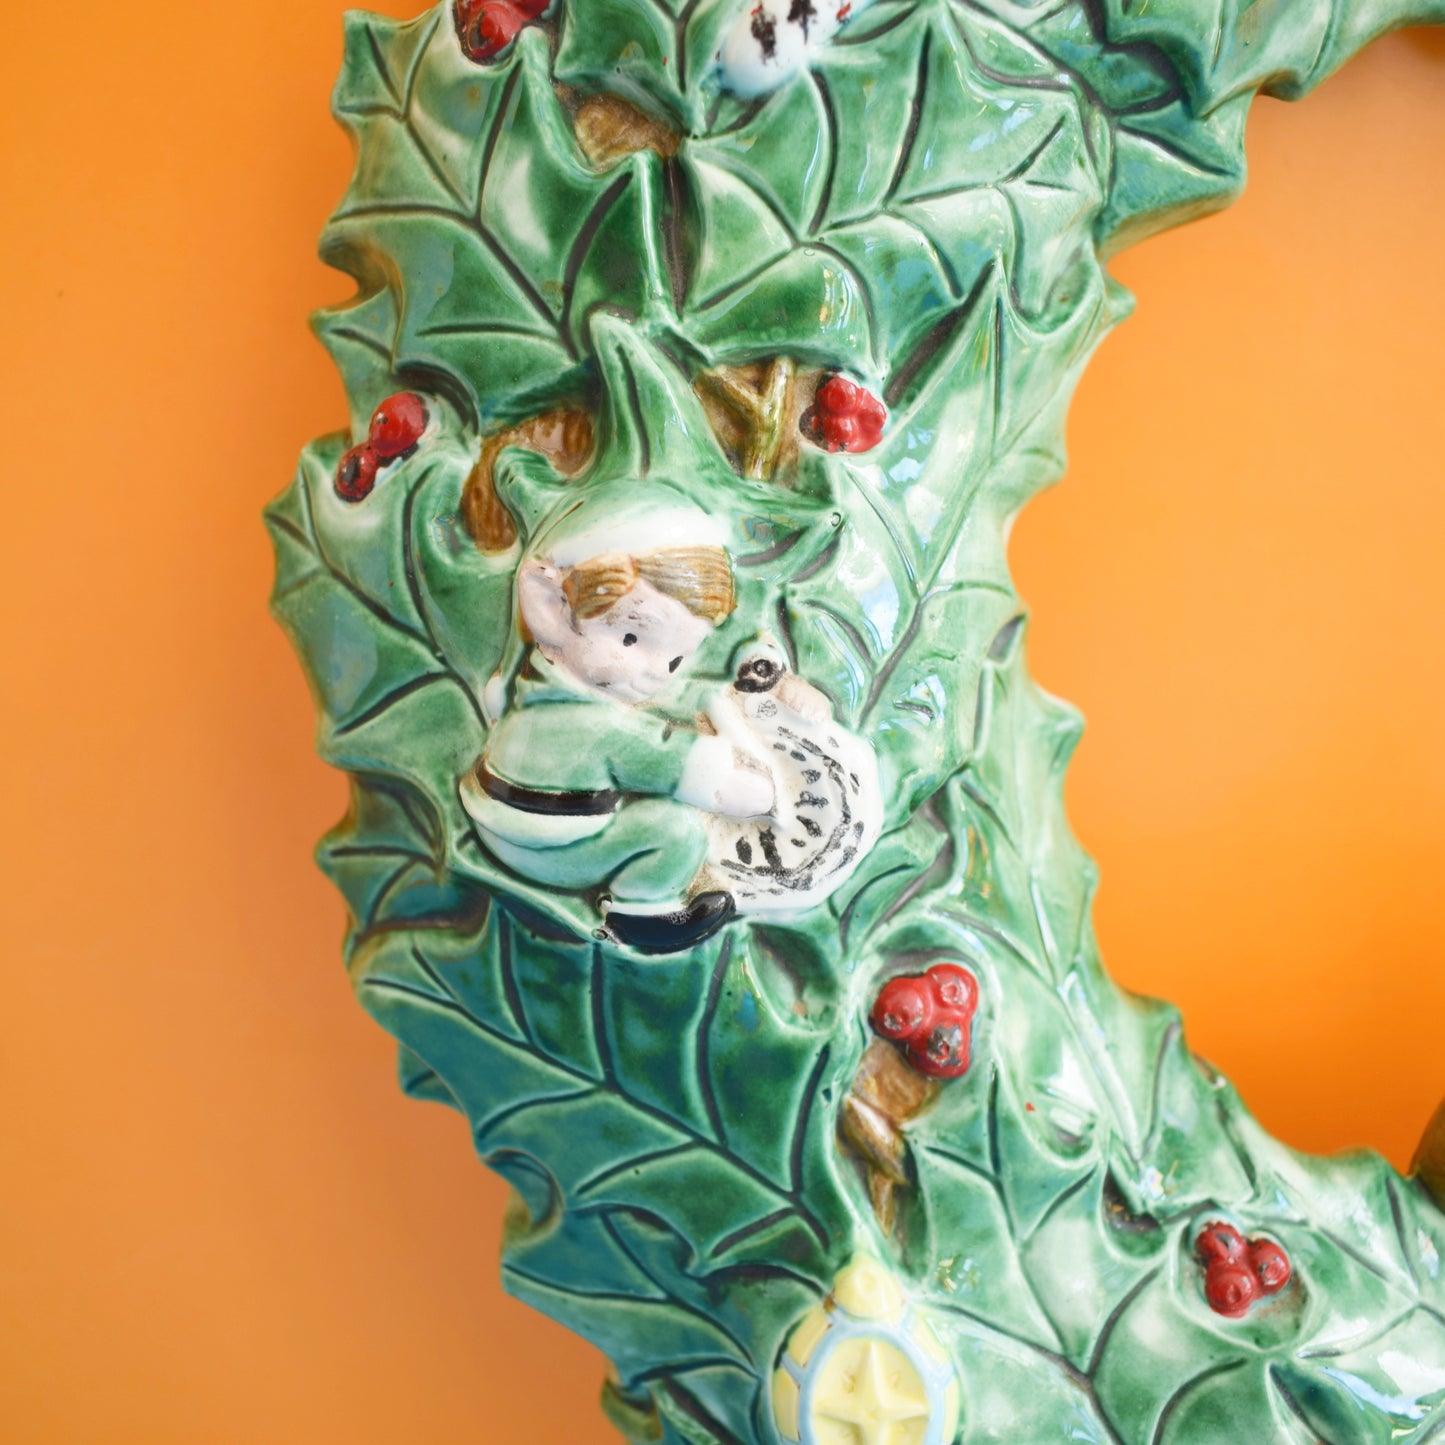 Vintage 1960s Ceramic Christmas Tree Wreath